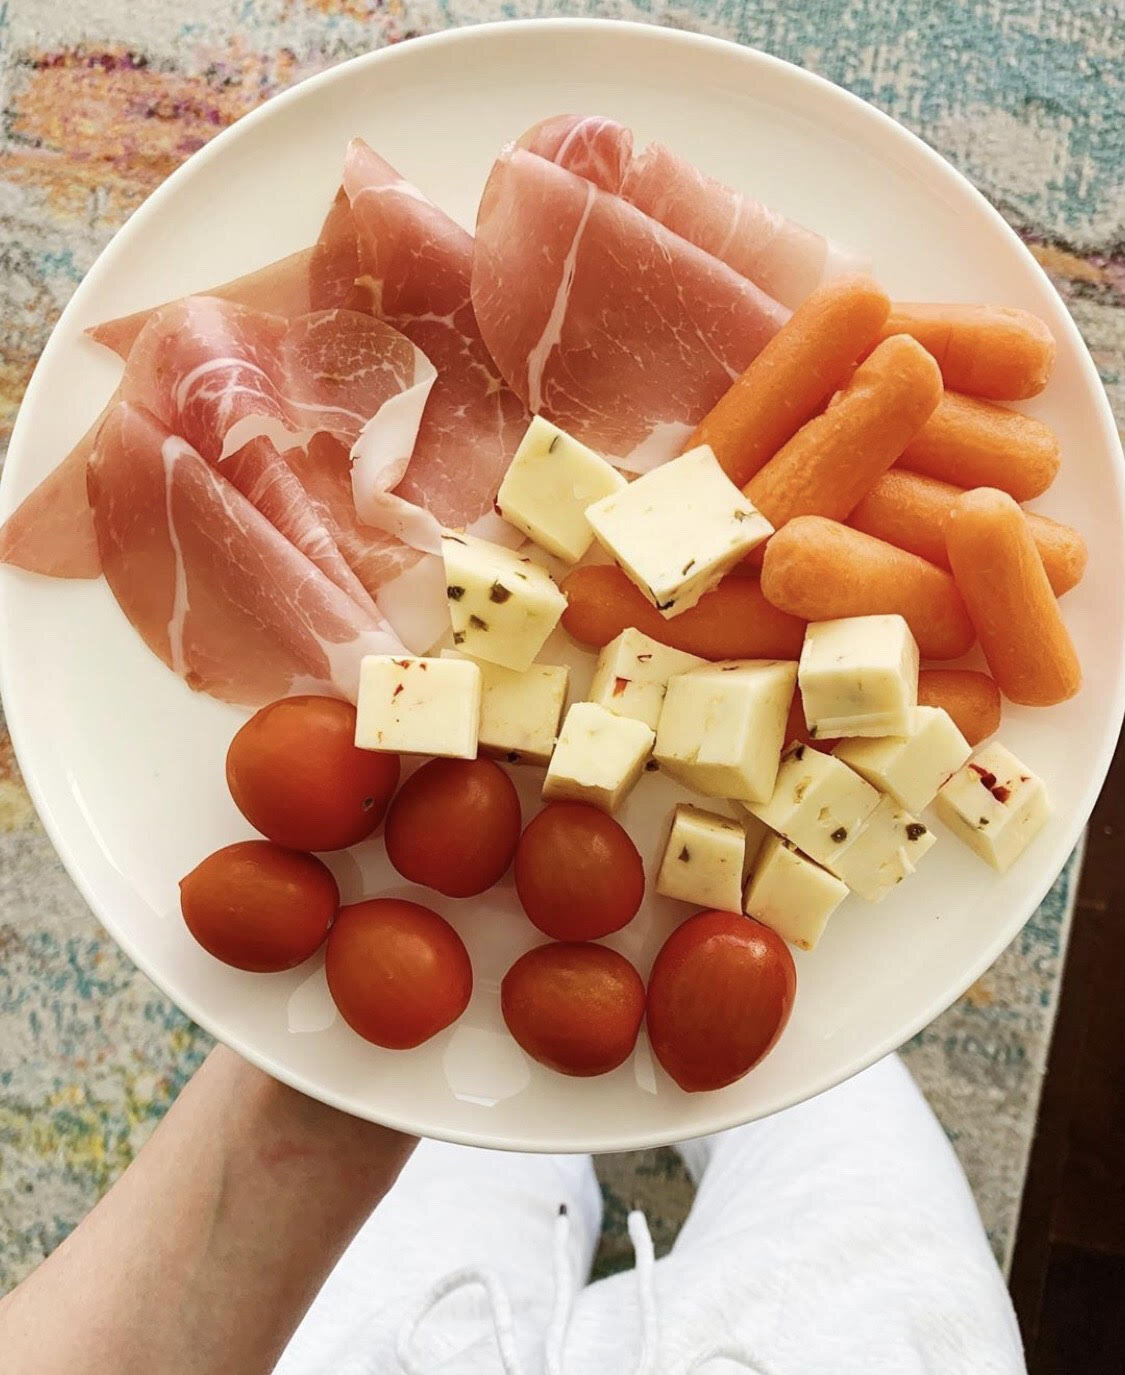 Snacky lunch plate of prosciutto